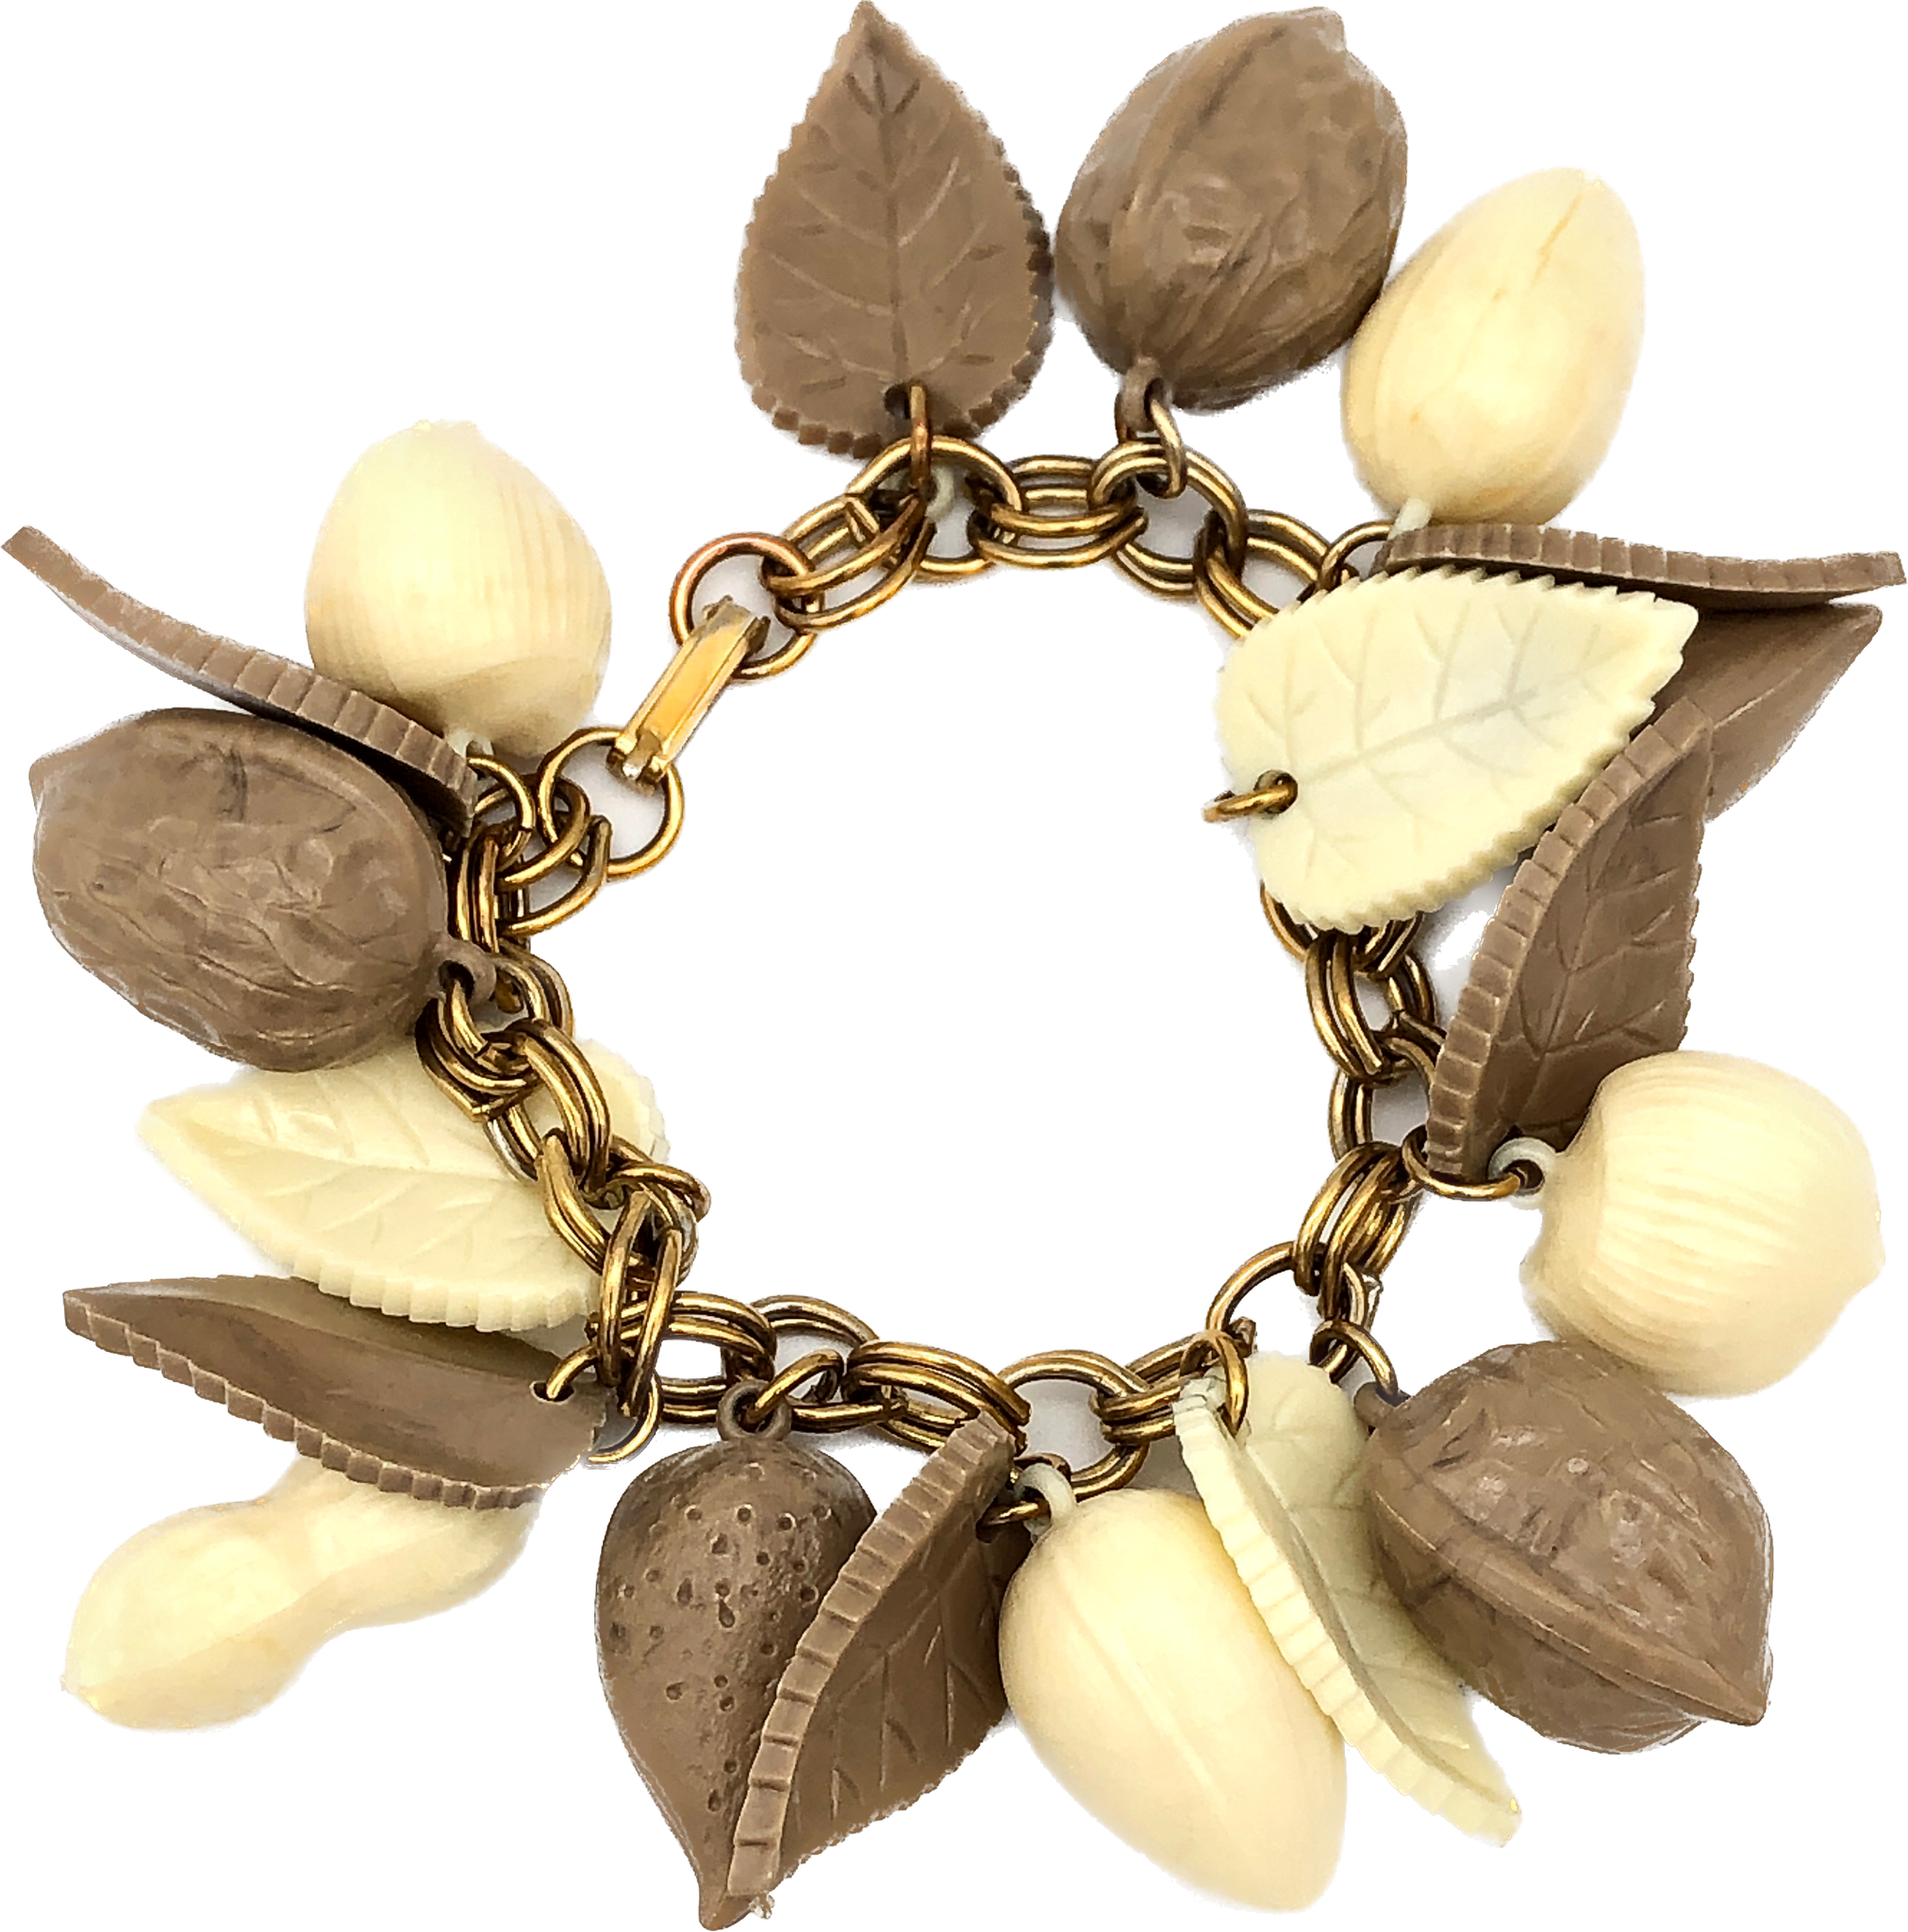 1960s NUTS Celluloid Charm Bracelet